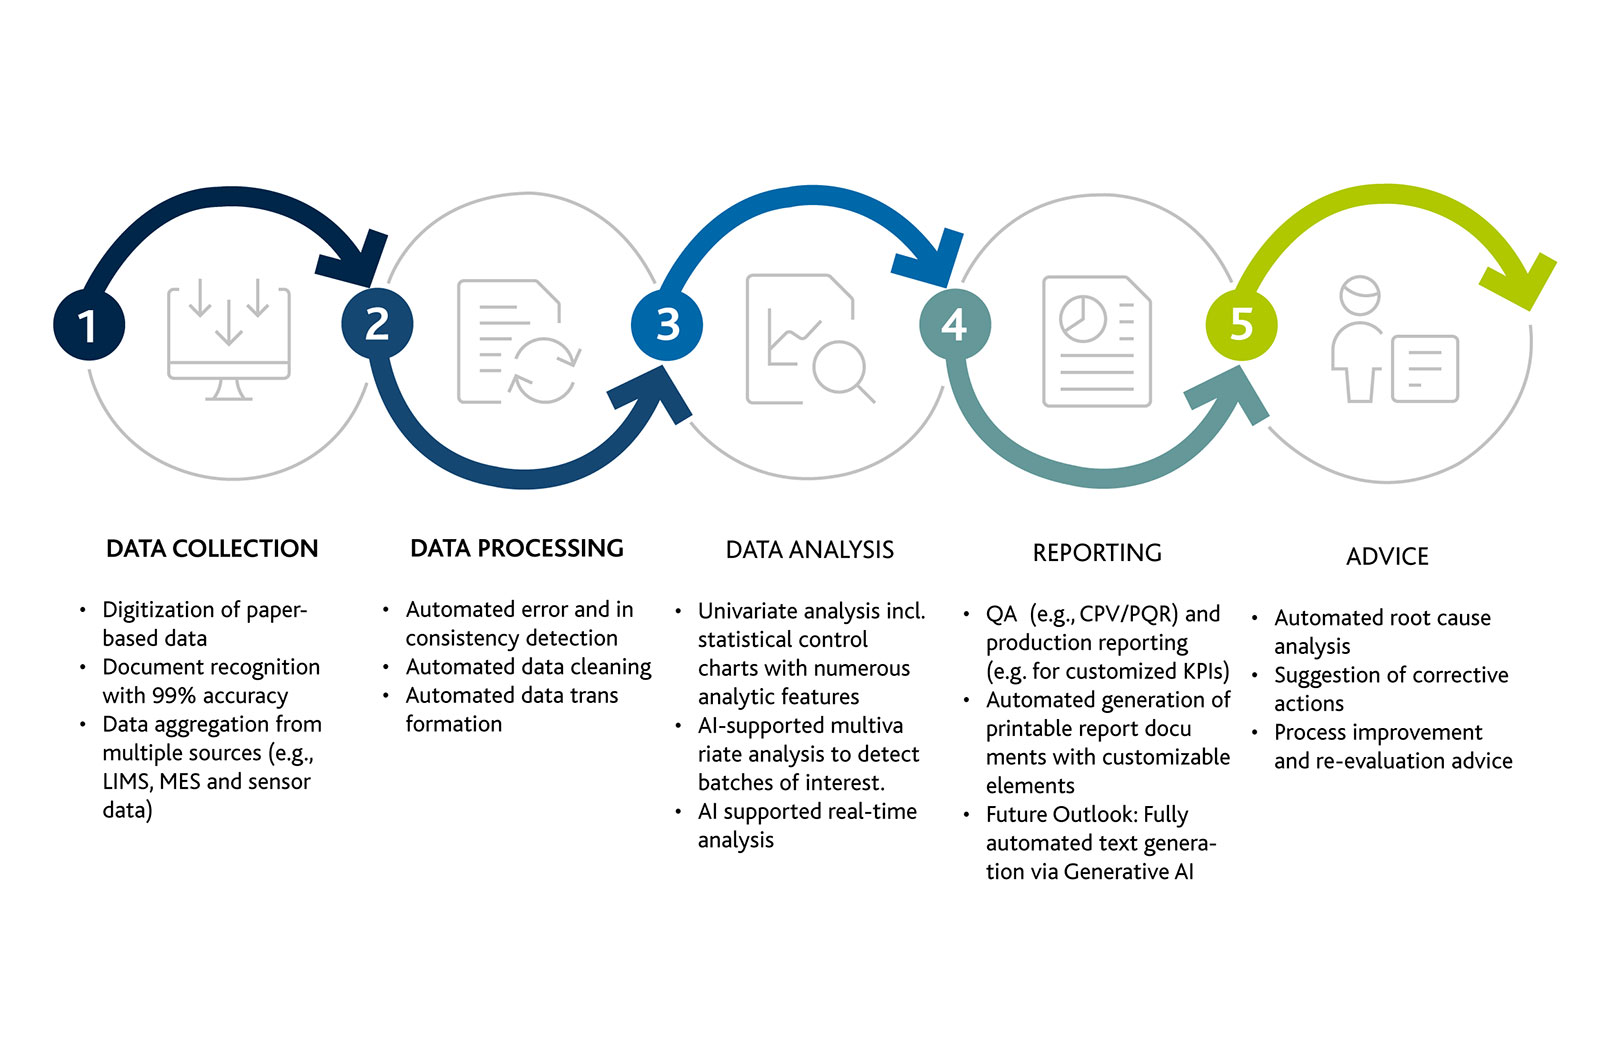 PRECTAVI - Platform for data management and analysis